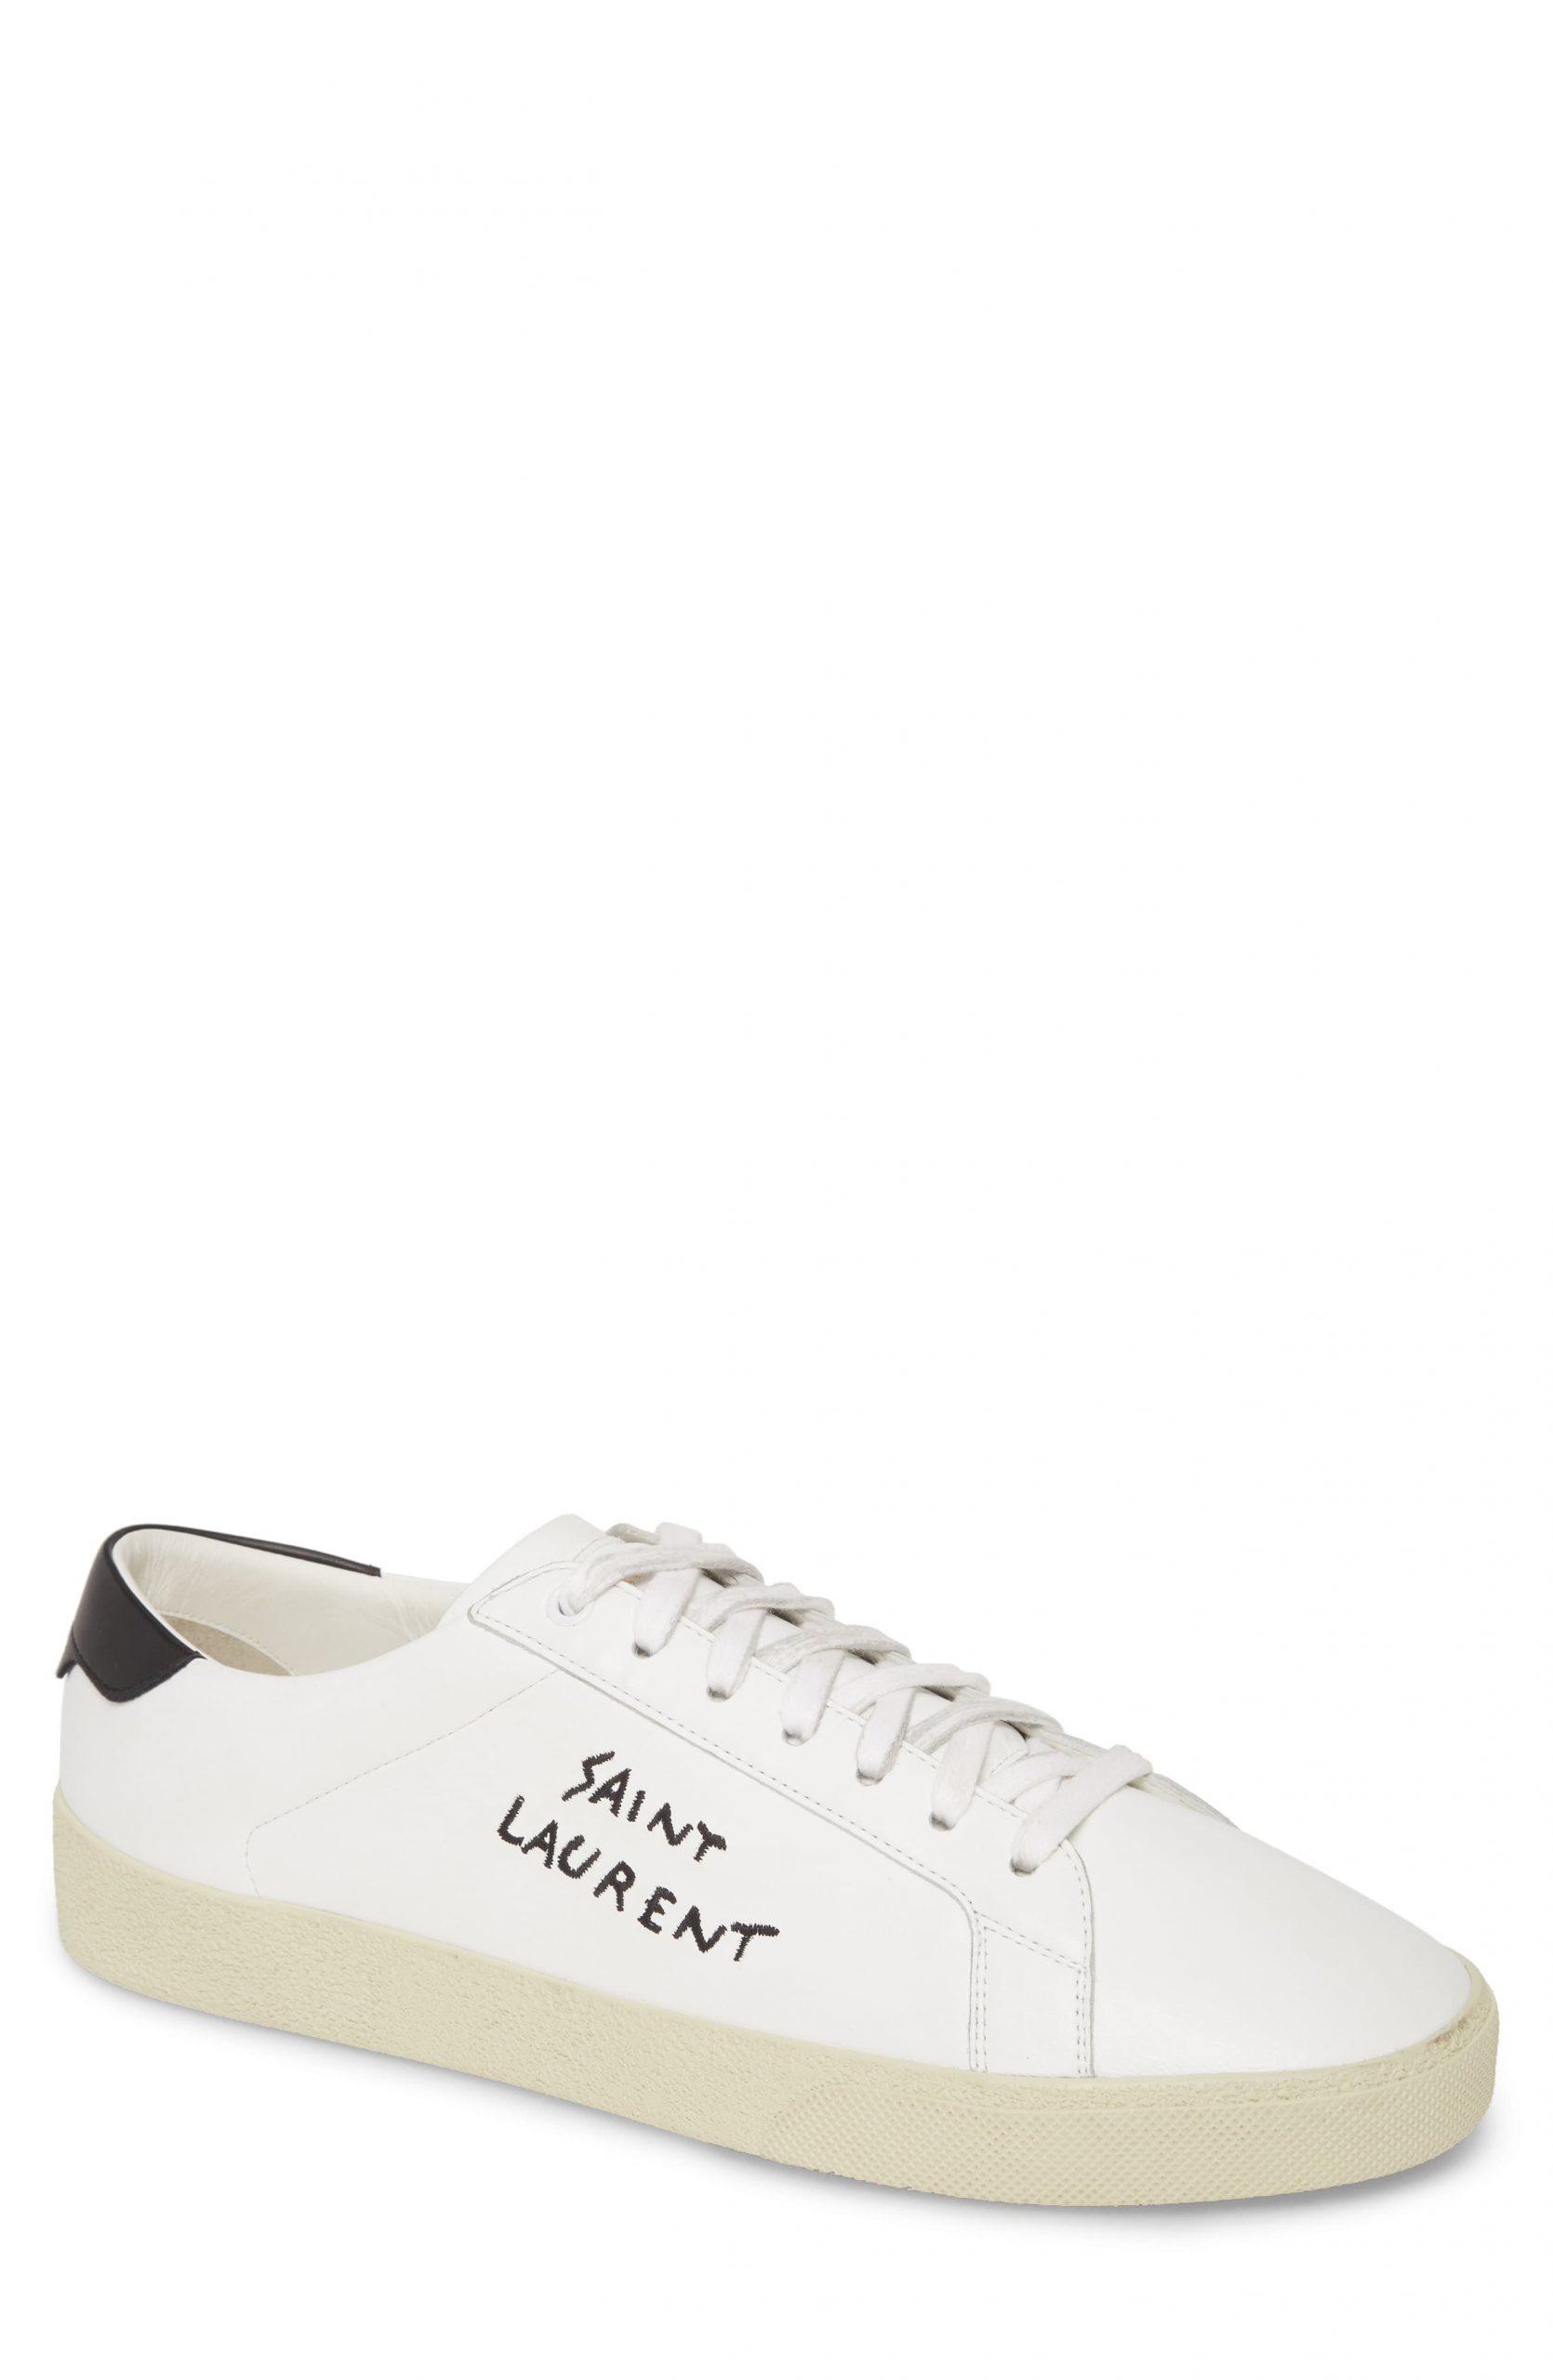 saint laurent white low top sneakers